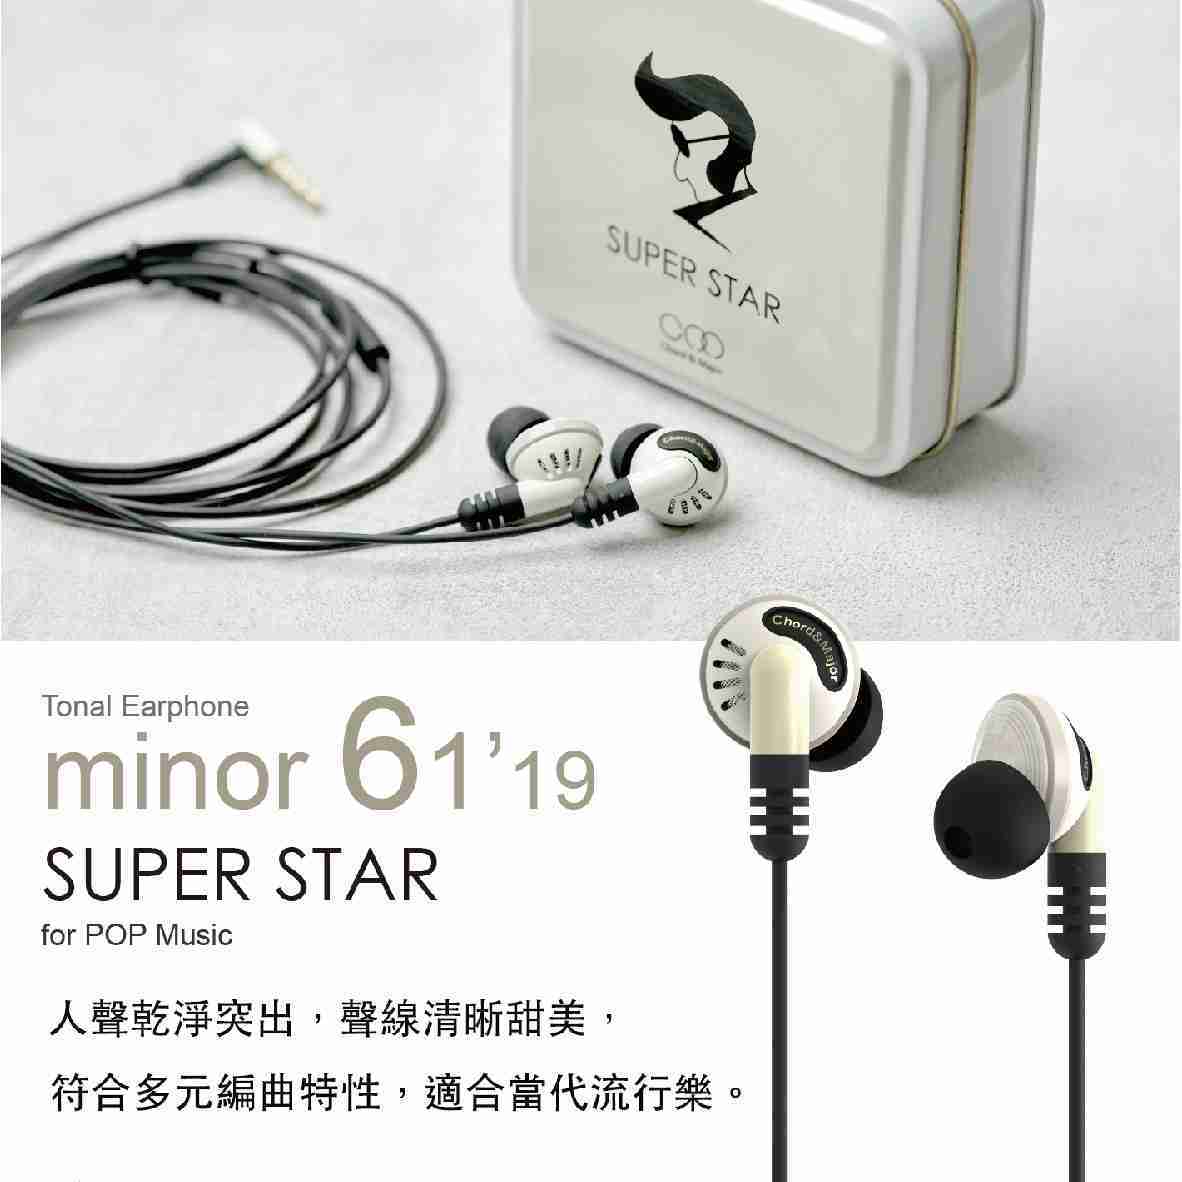 Chord & Major 小調性耳機 超級巨星 minor series 耳道式 耳機 | My Ear 耳機專門店